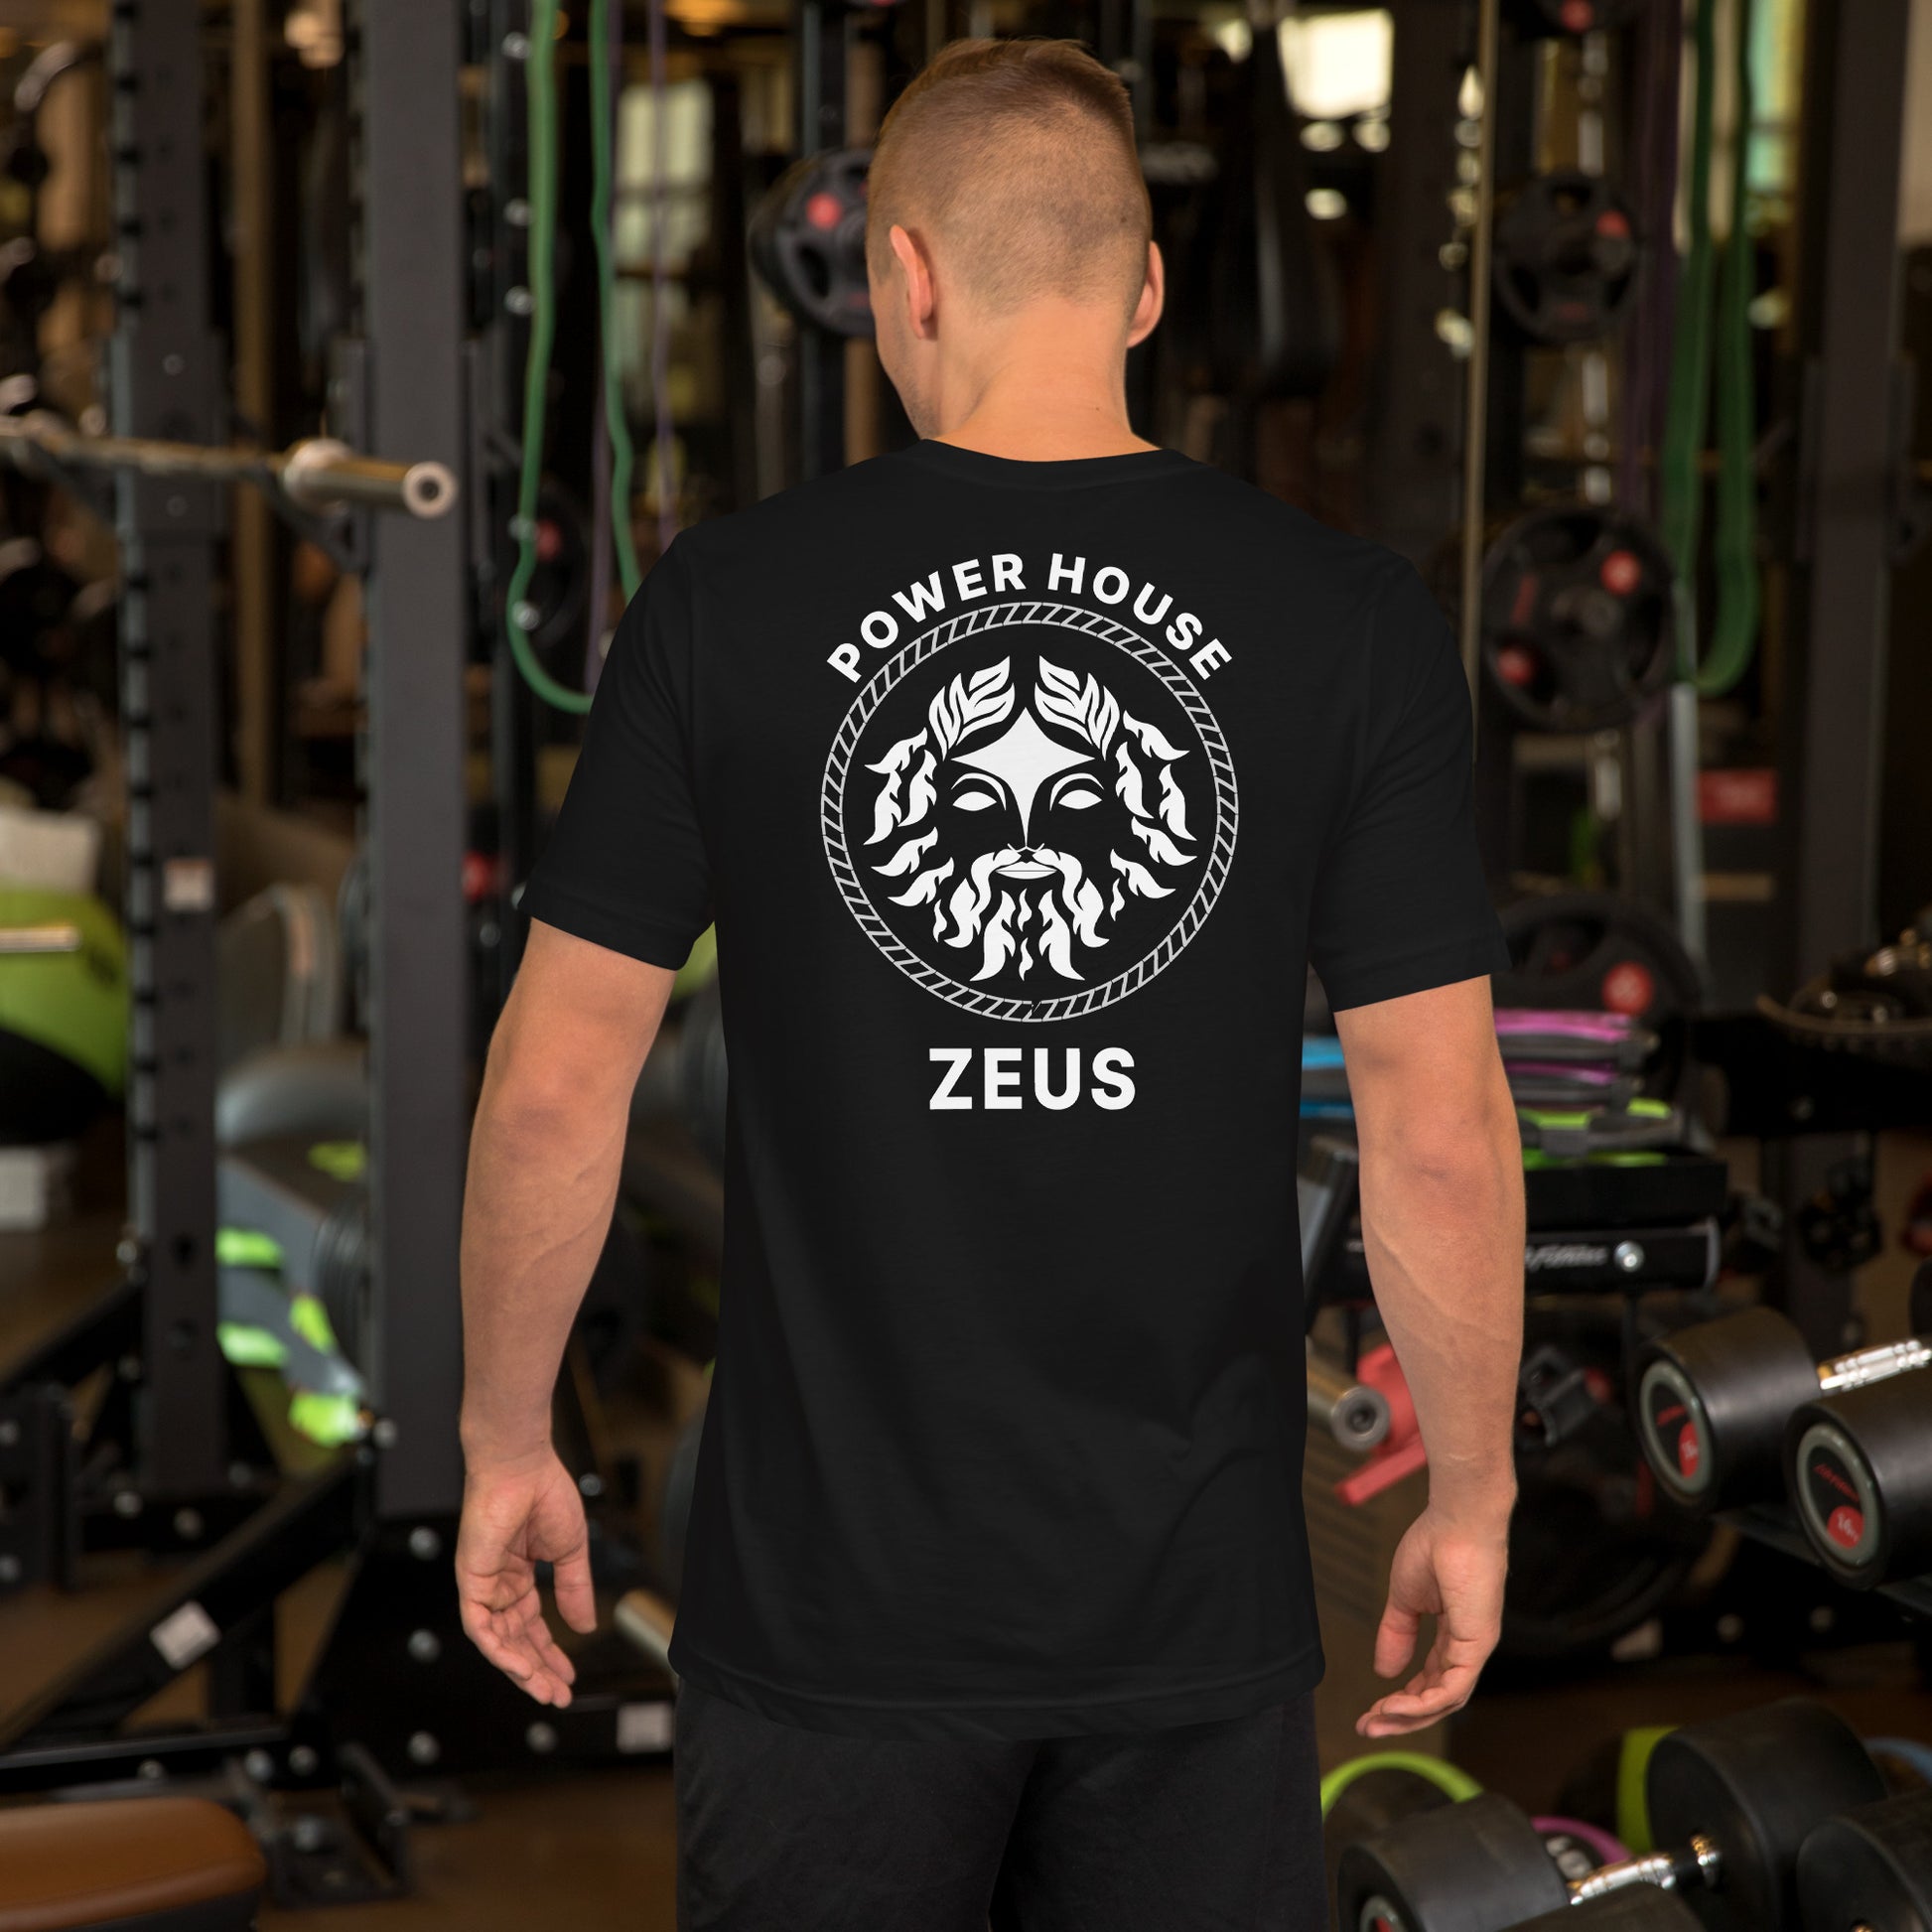 Zeus - tshirts - shirts - gym - workout - online shopping